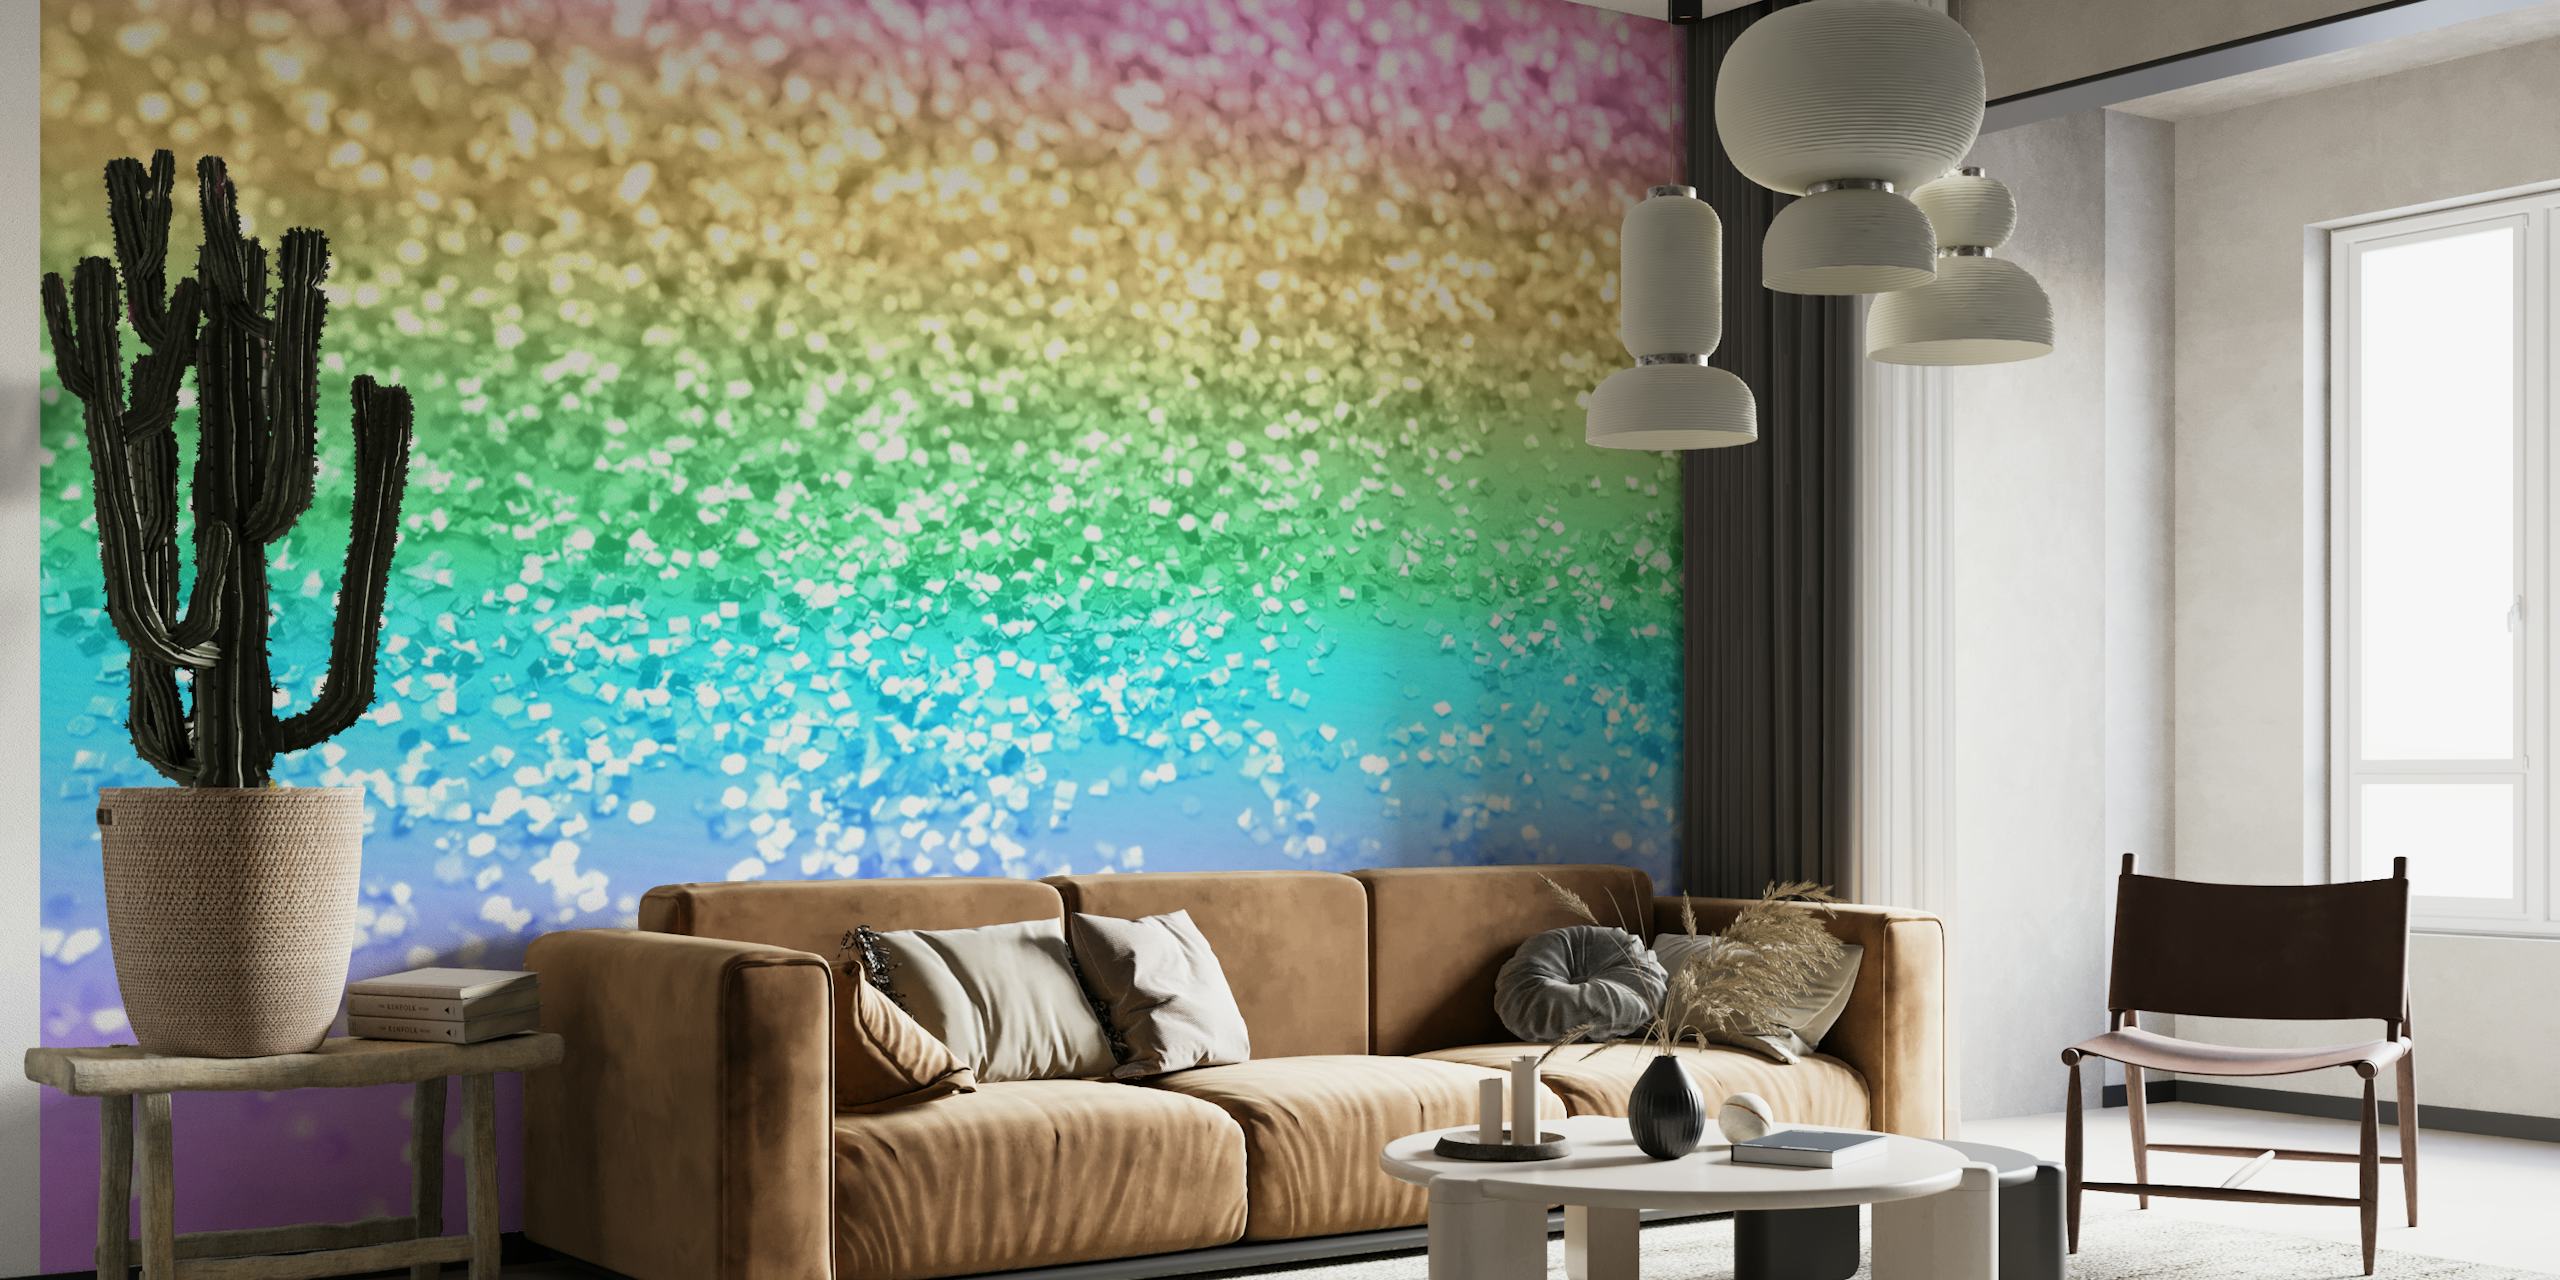 Fotomural vinílico de parede gradiente arco-íris pastel com efeito de brilho cintilante